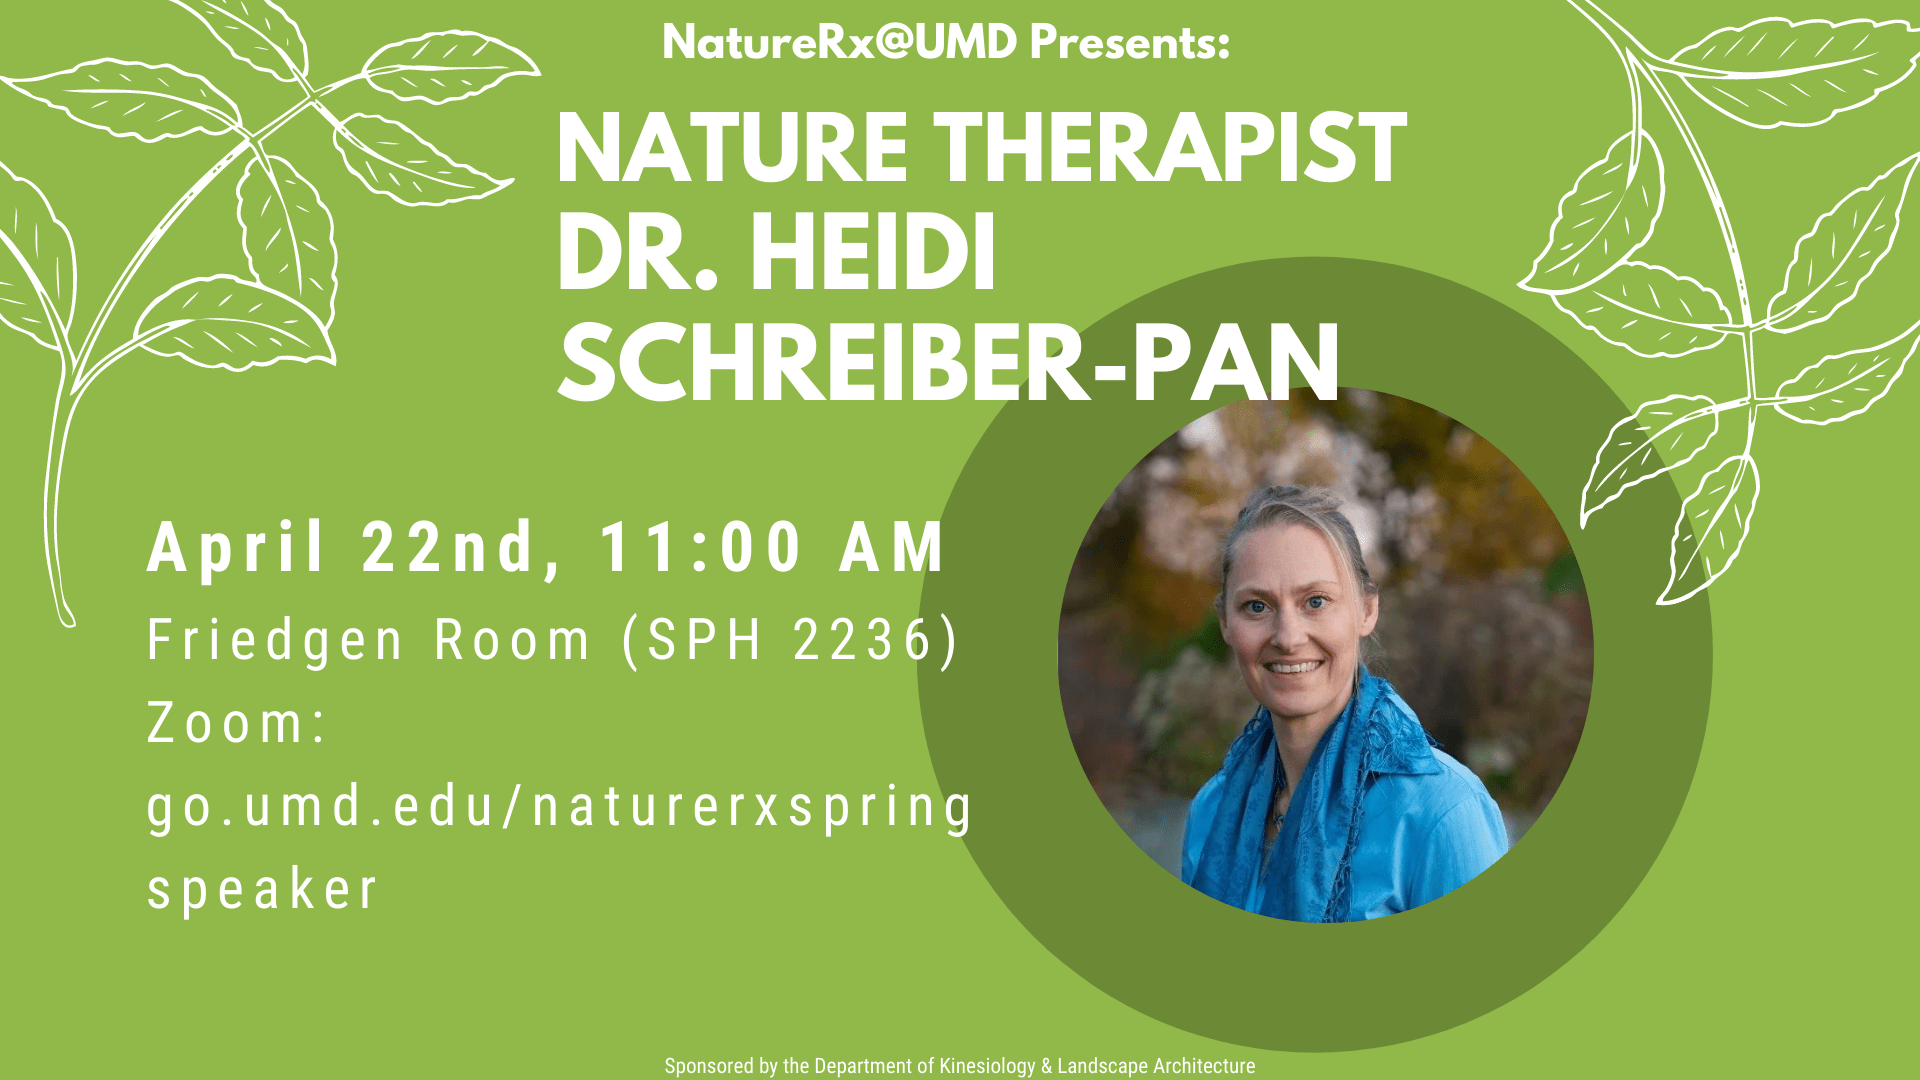 NatureRx@UMD Presents Nature Therapist Dr. Heidi Schreiber-Pan